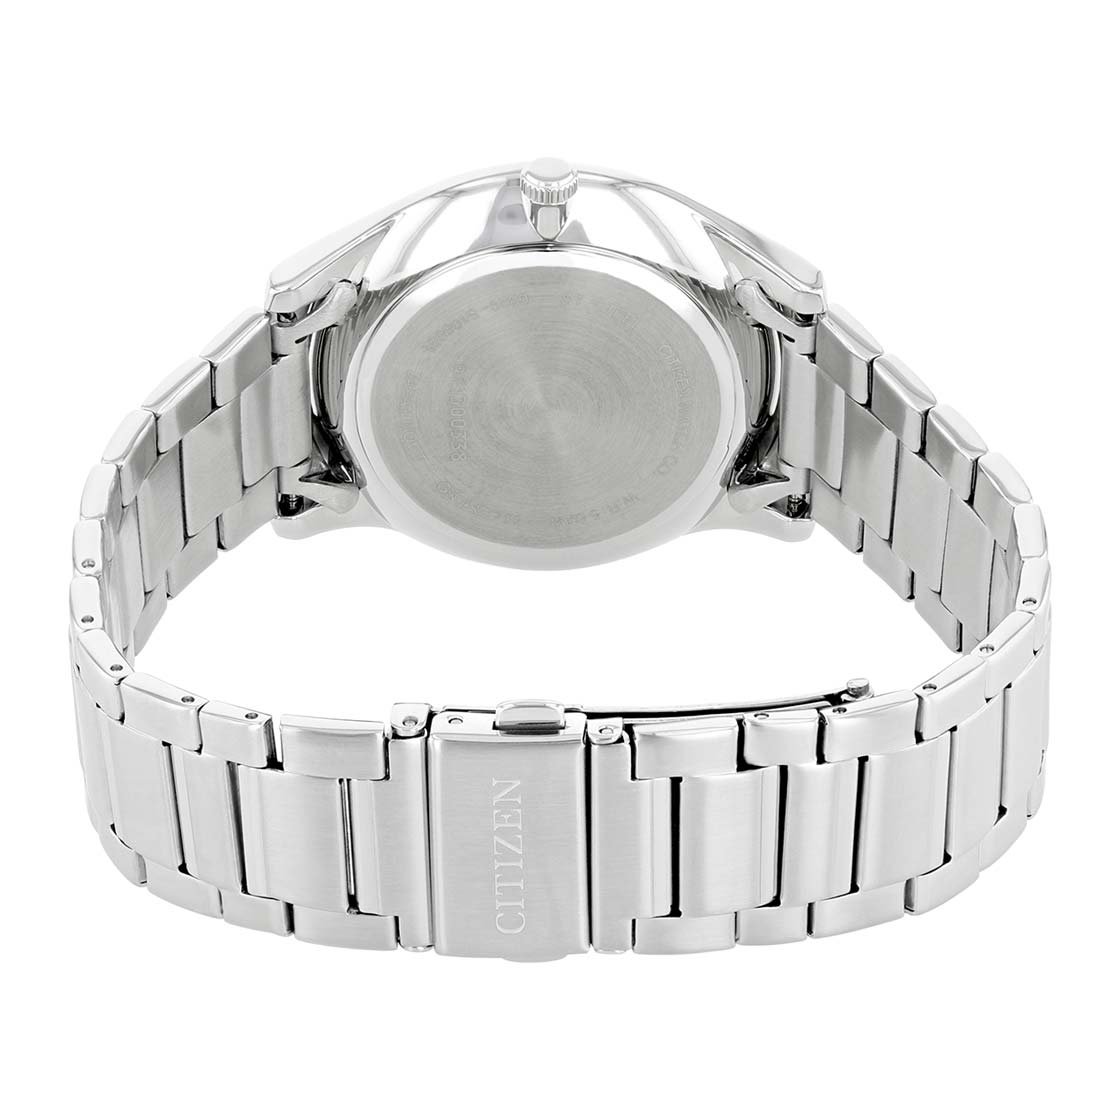 Citizen - AG8351-86A -Quartz Chronograph Stainless Steel Men's Watch